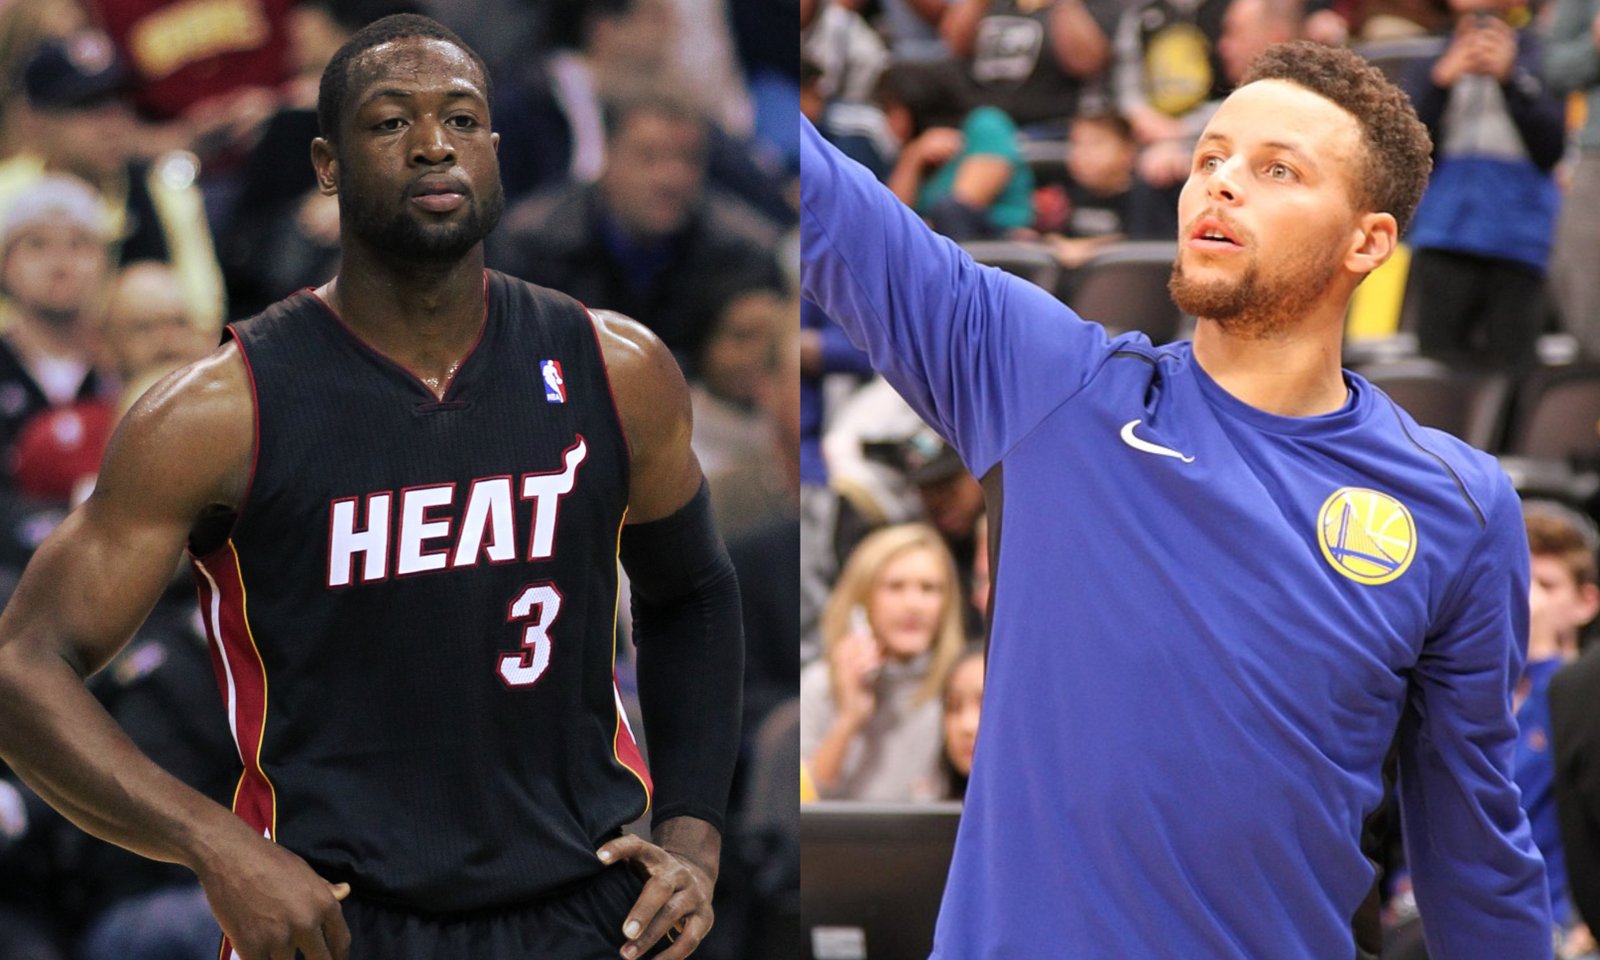 NBA: Curry, Wade discuss Heat vs Warriors dream superteam clash